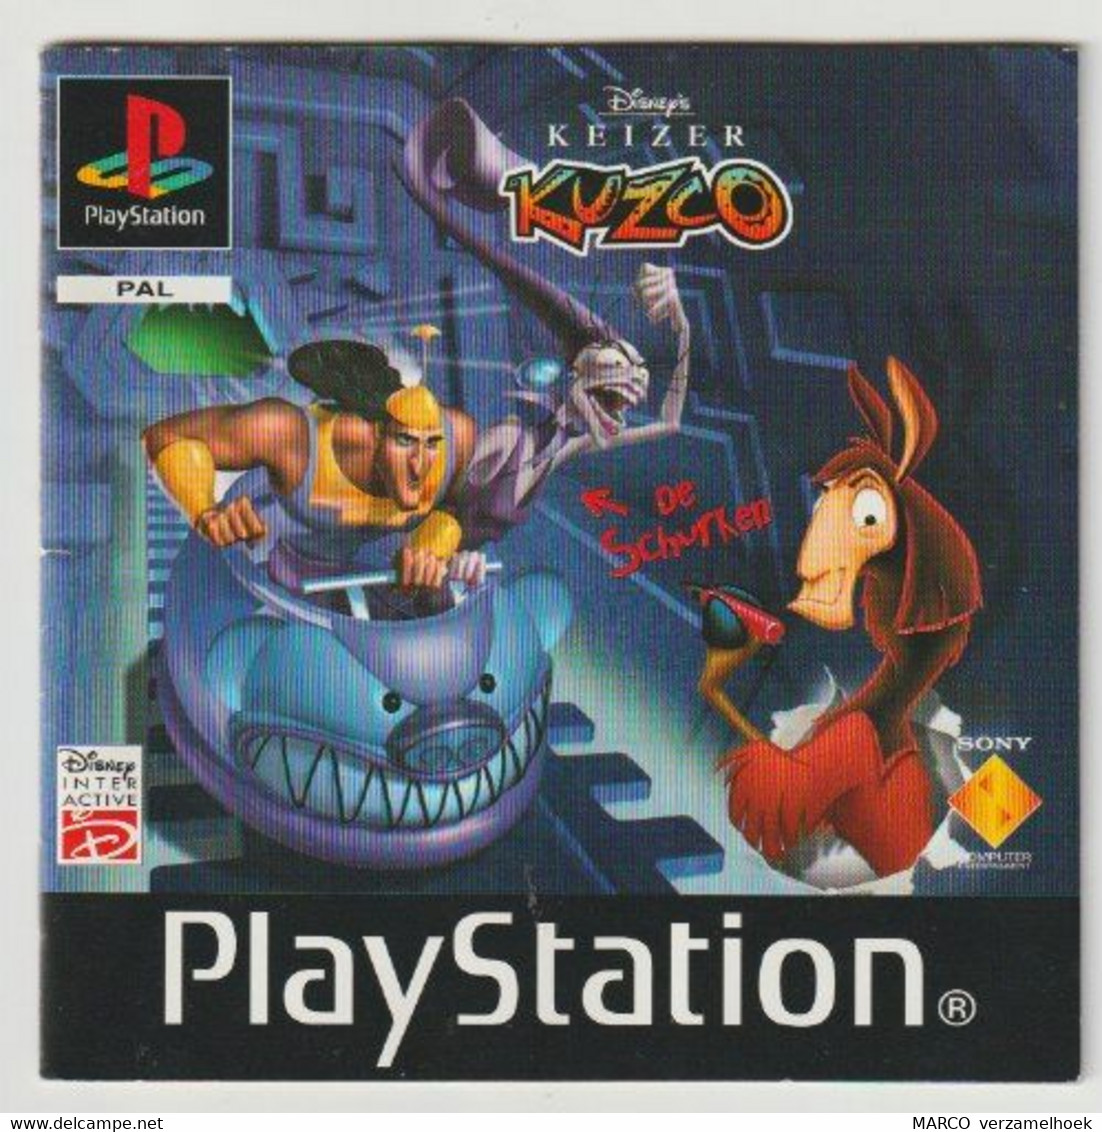 SONY Playstation Disney's Keizer KUZCO 2000 - Playstation